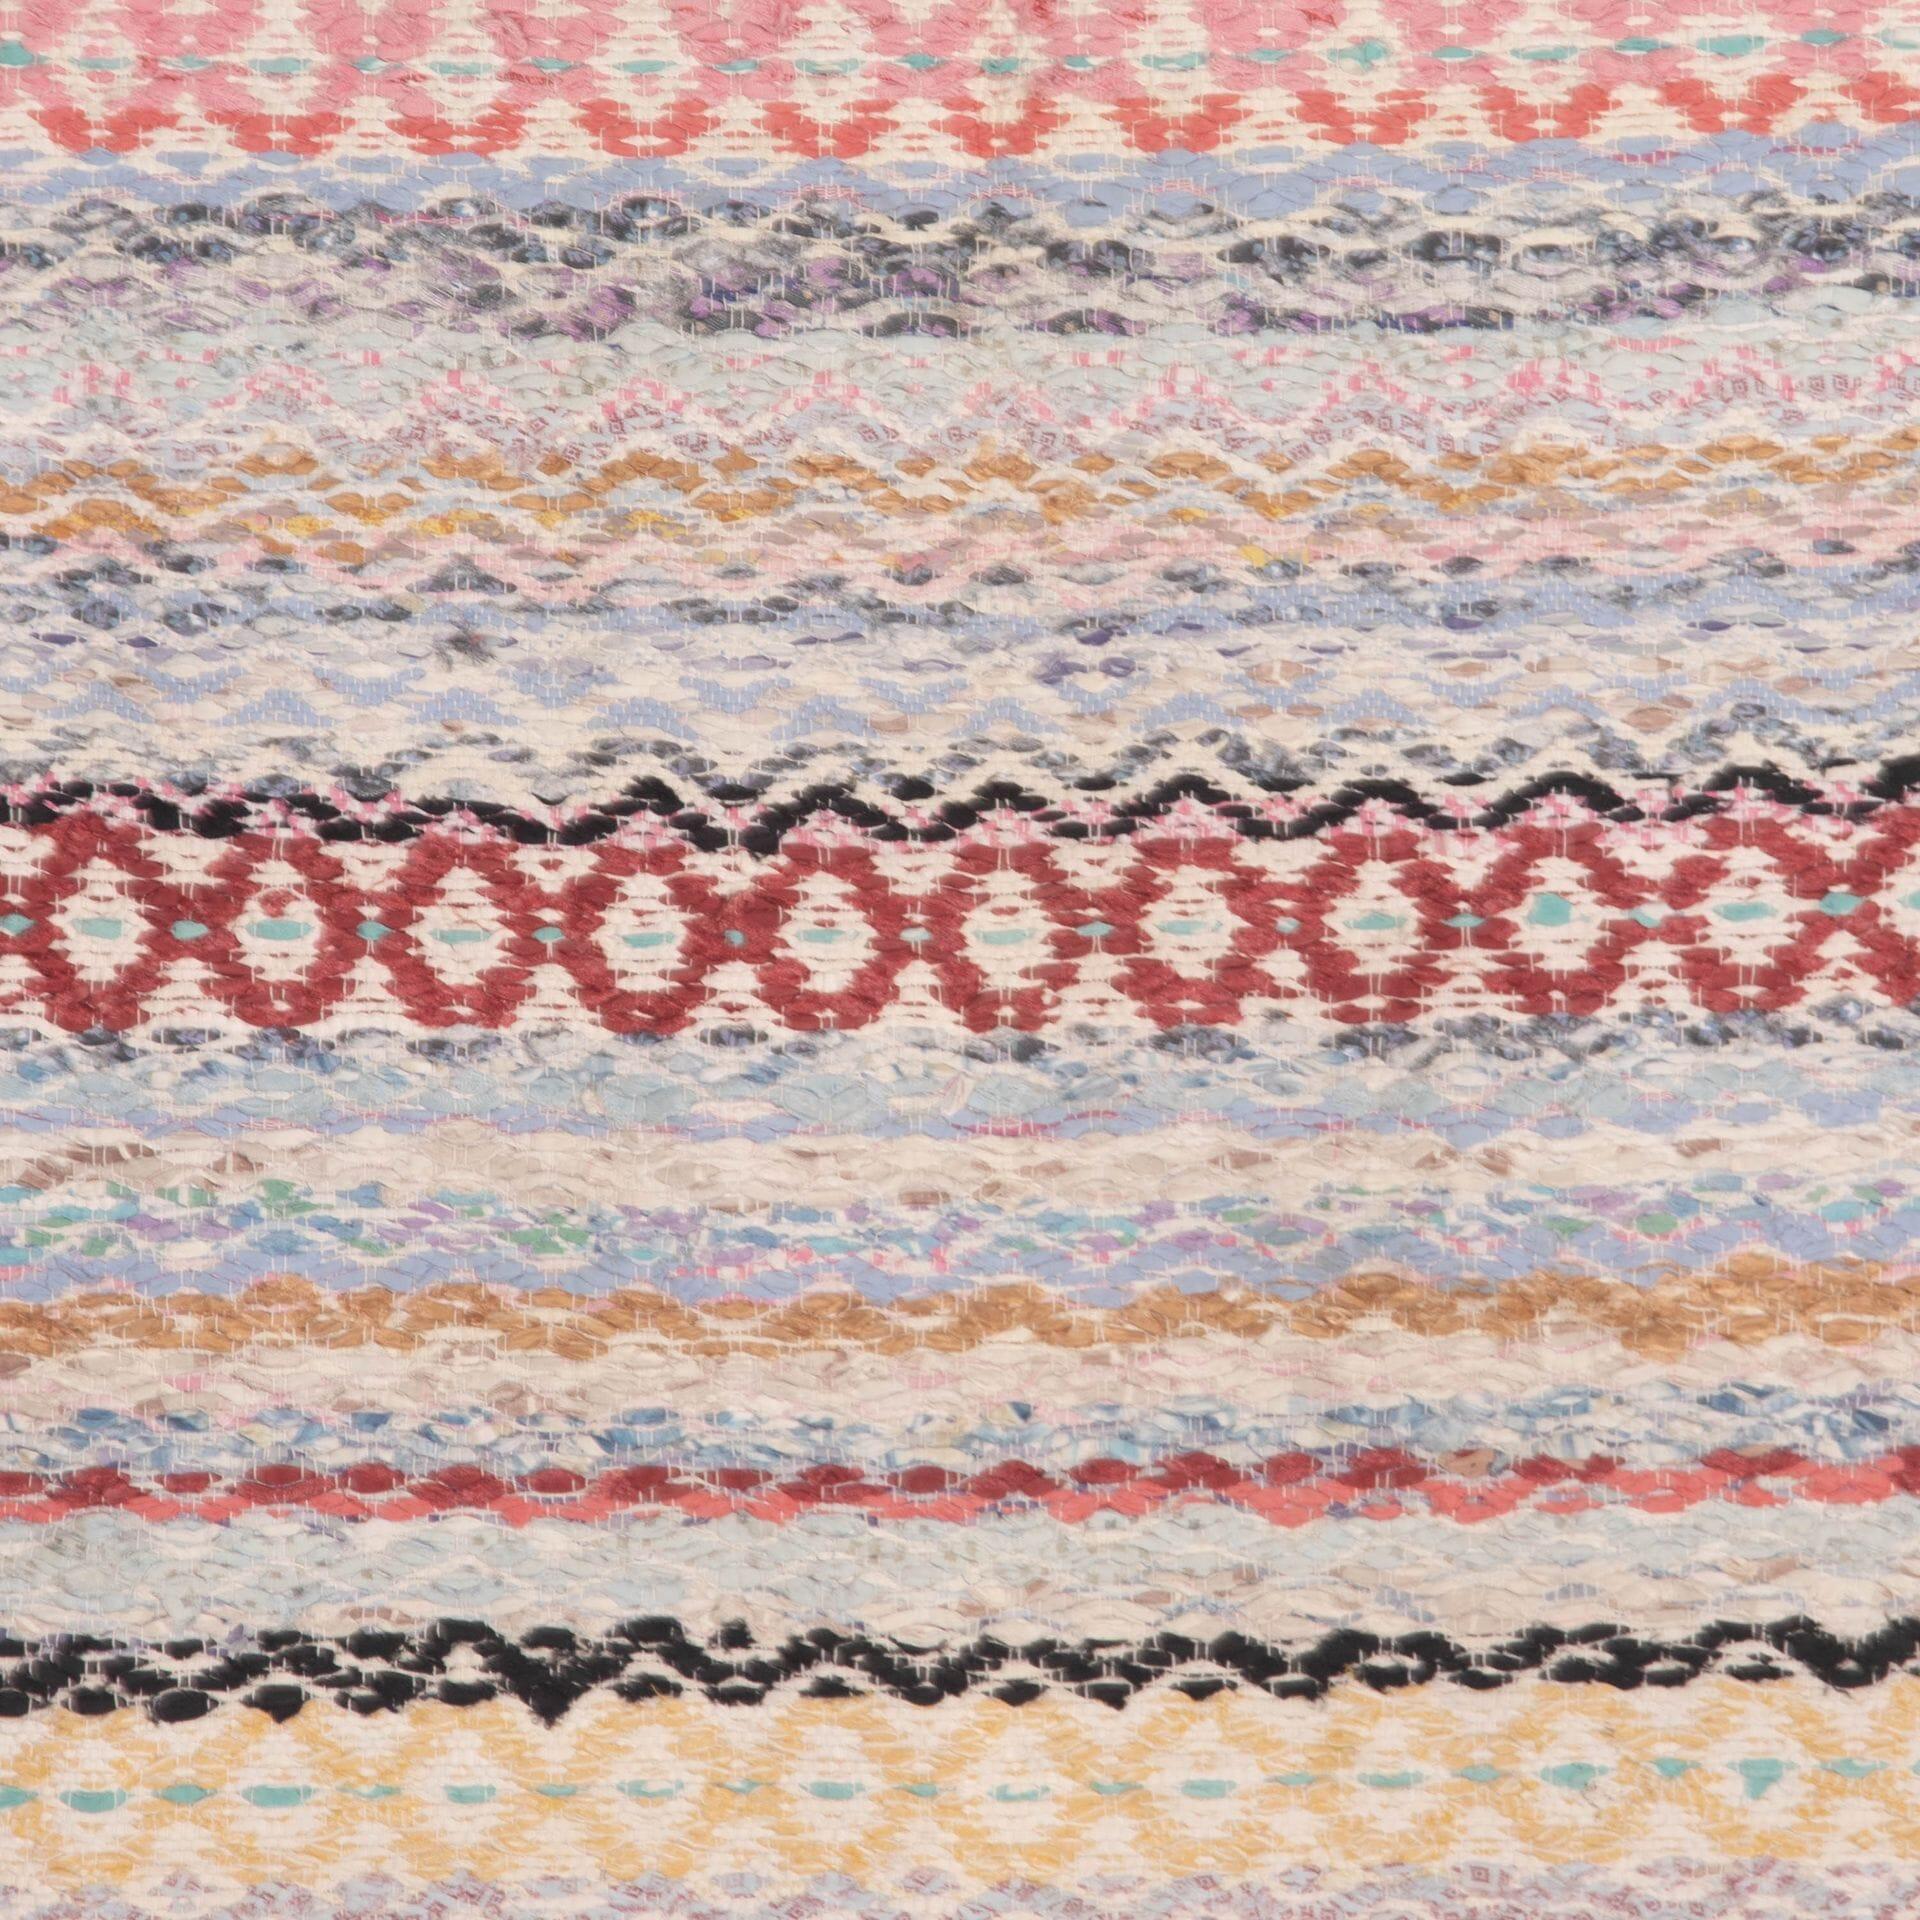 20th century traditional Swedish rug, blue, pink, mustard, red, black. 